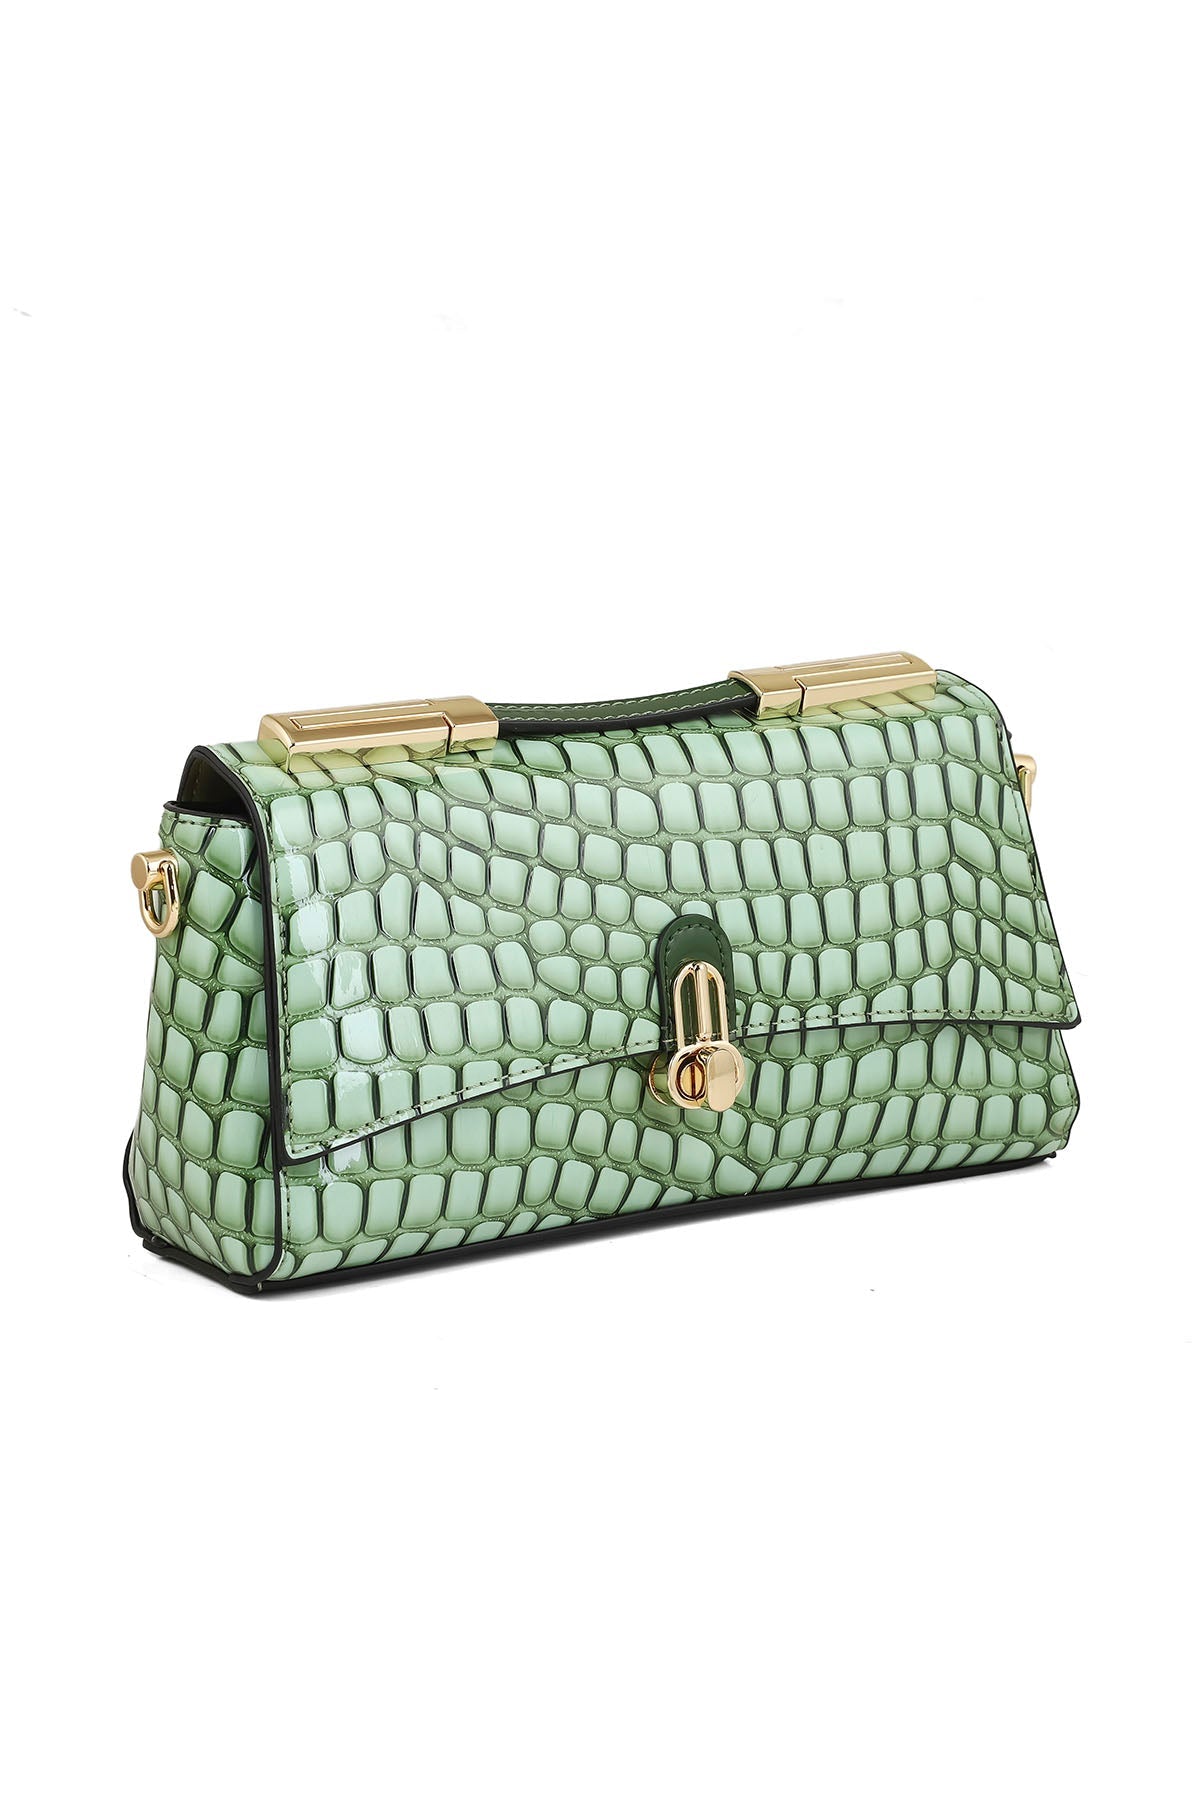 Top Handle Hand Bags B15078-Green